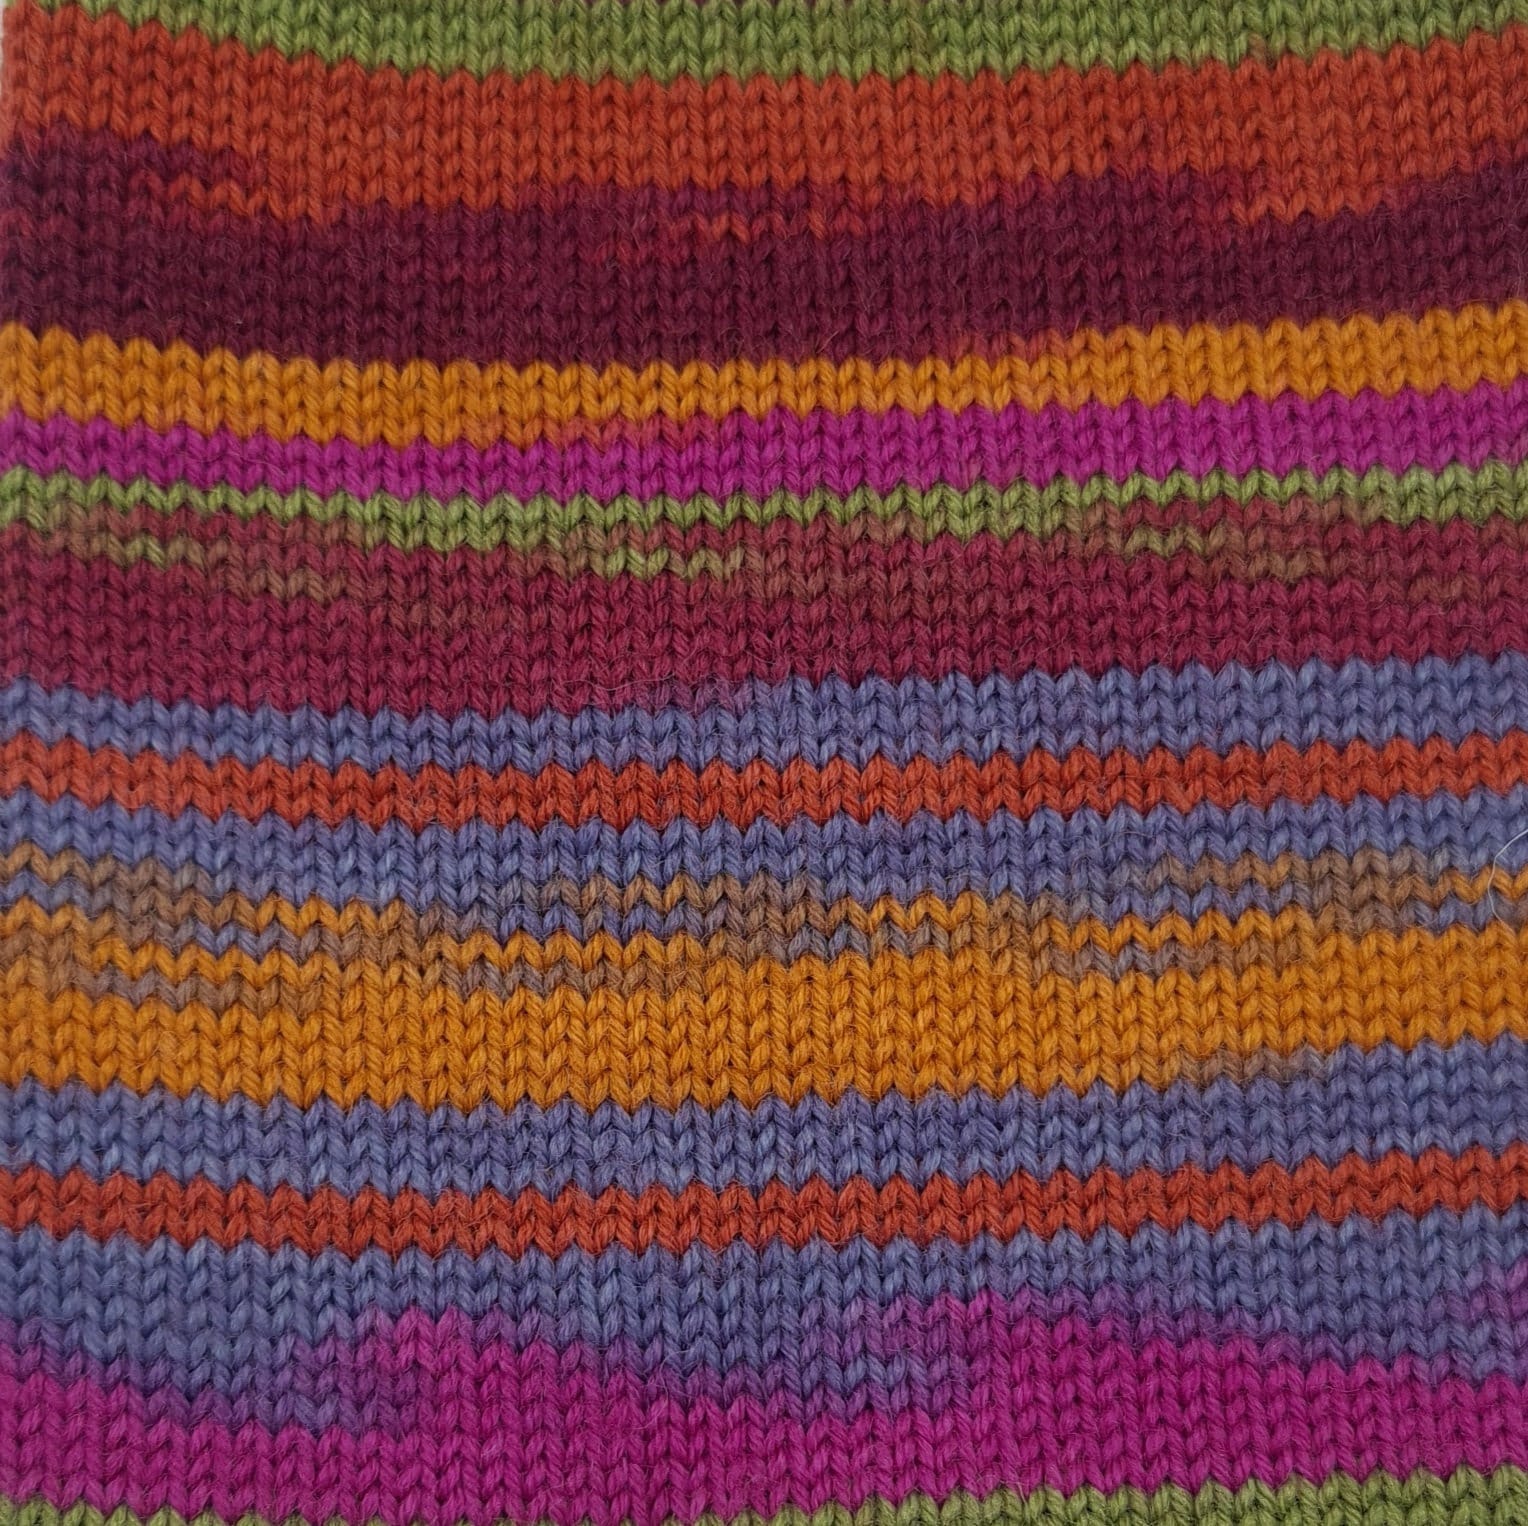 Sock Yarn - Self Patterning. 50g ball of Regia Design Line by Kaffe Fassett Exotic Color, Clay. FREE sock pattern. Wool Polyamide mix